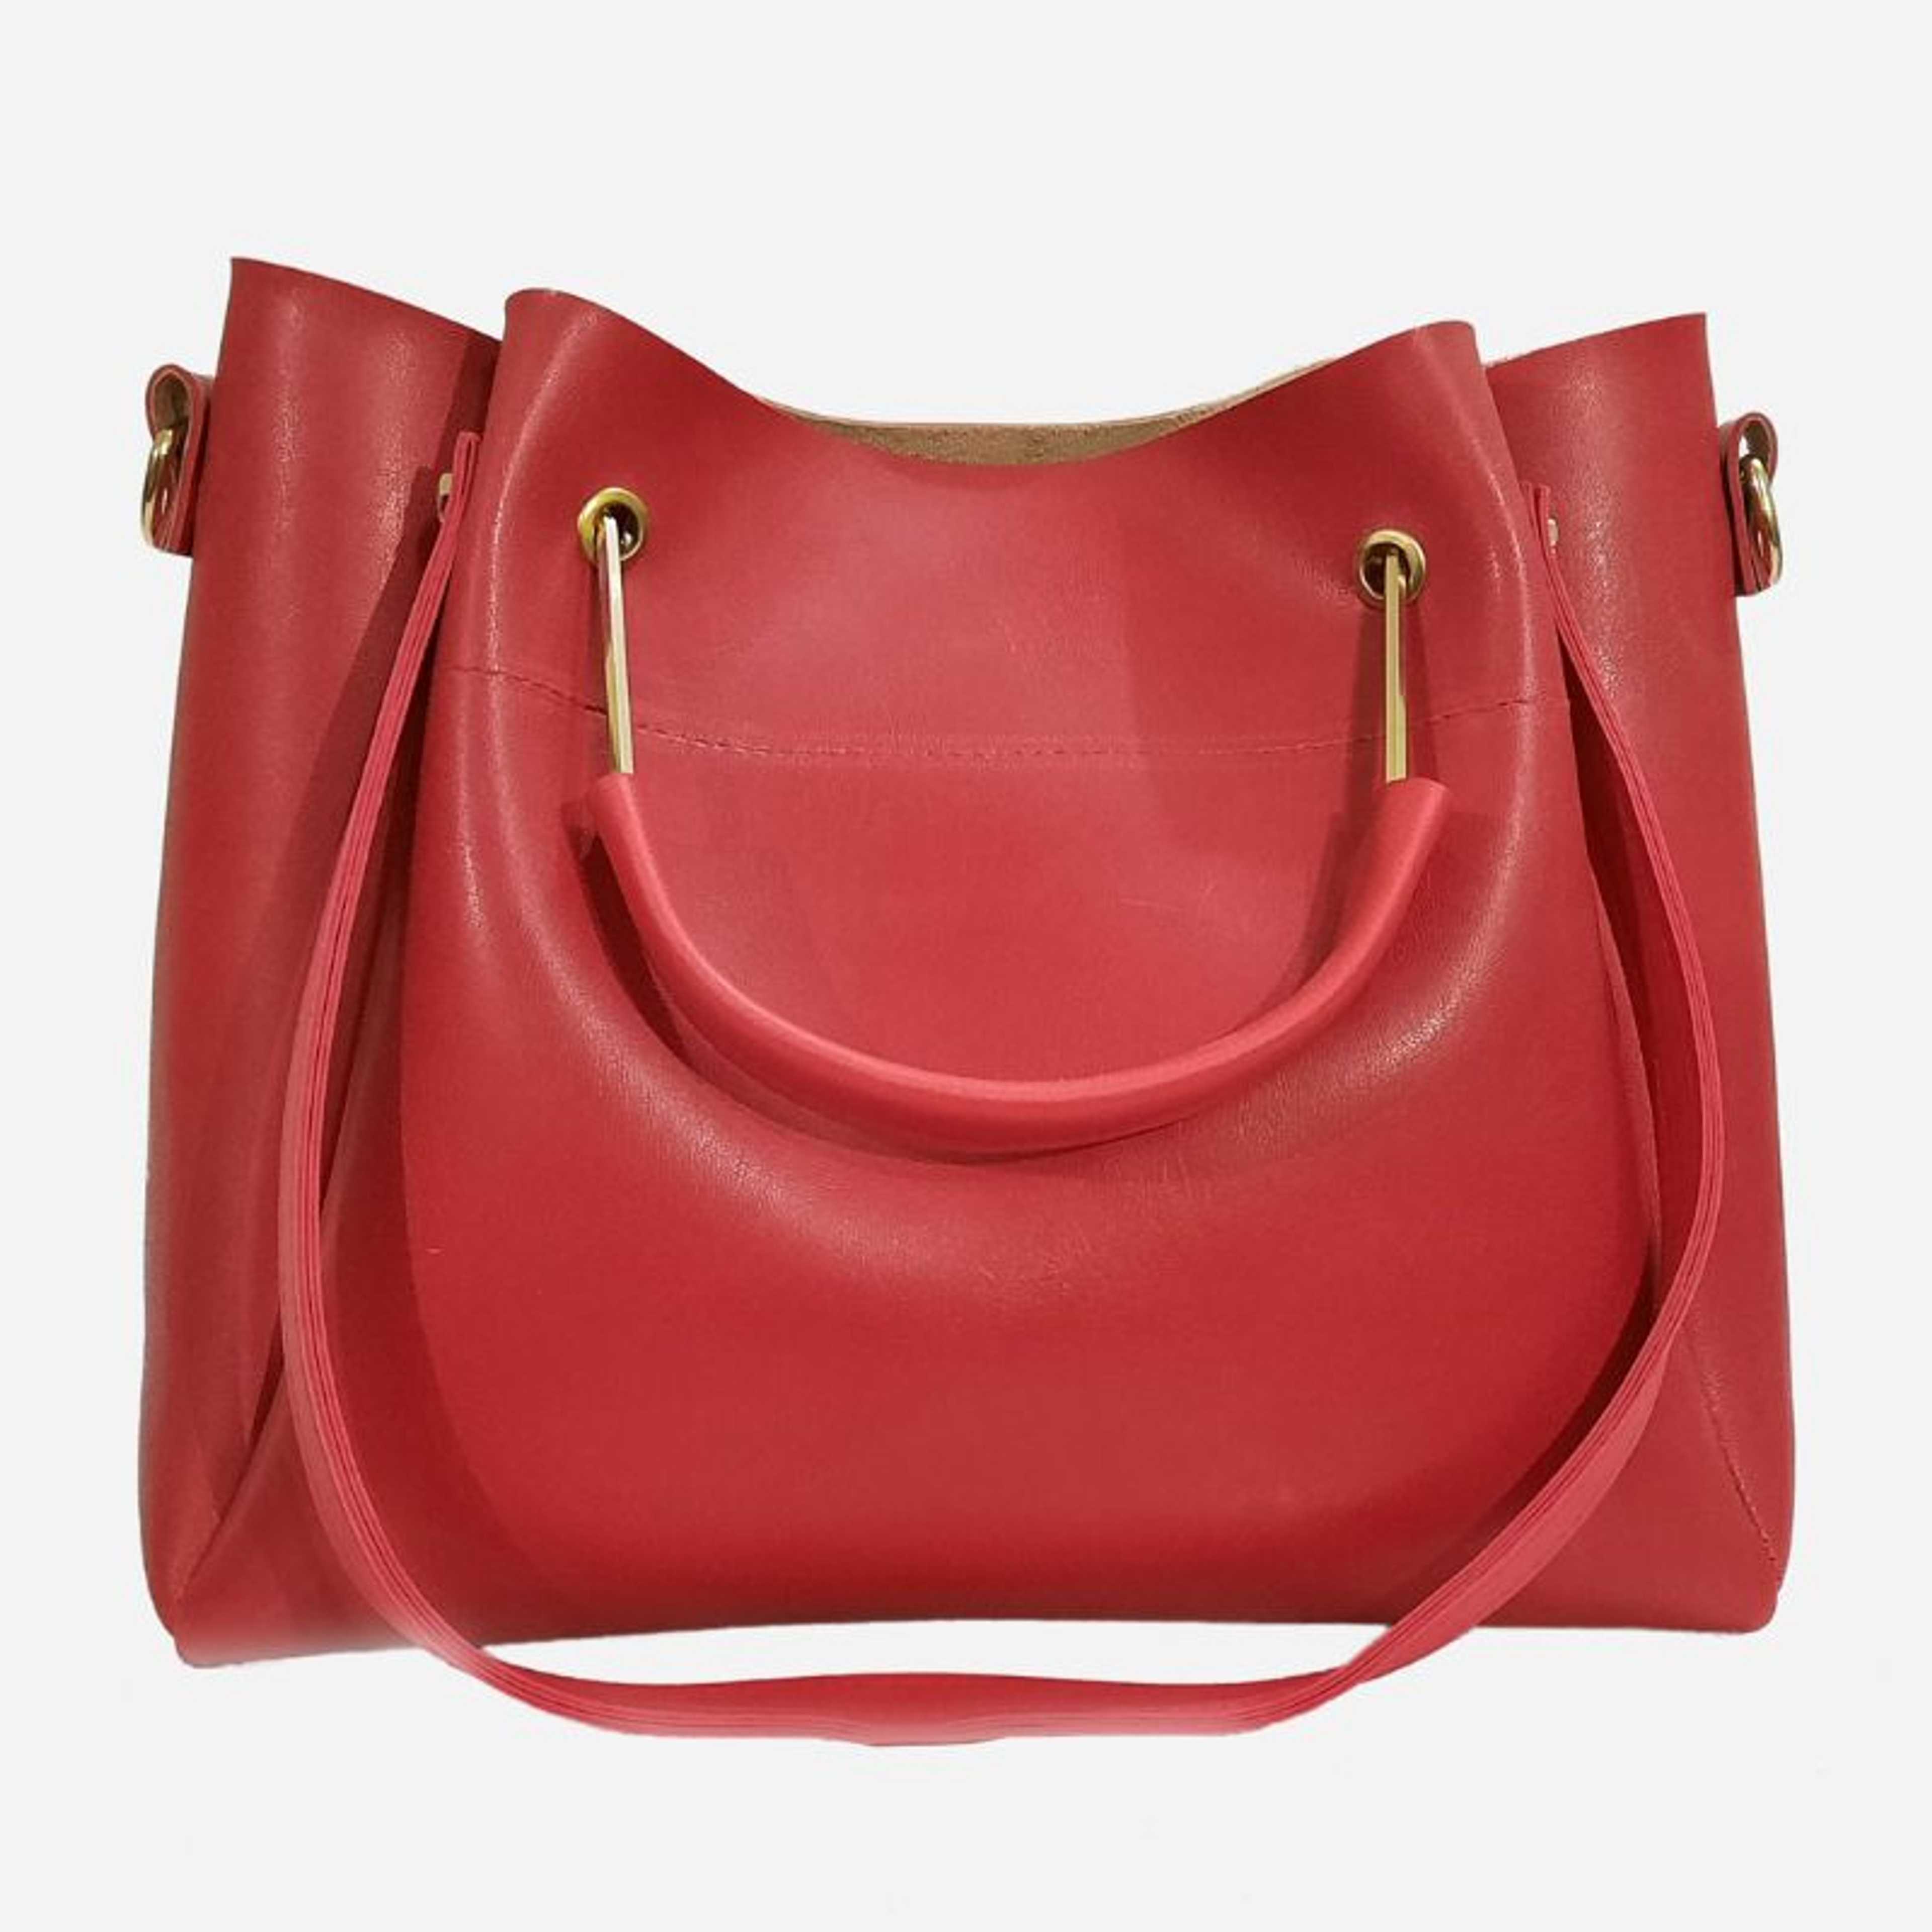 Handbag For Woman - Red Emerald Handbag